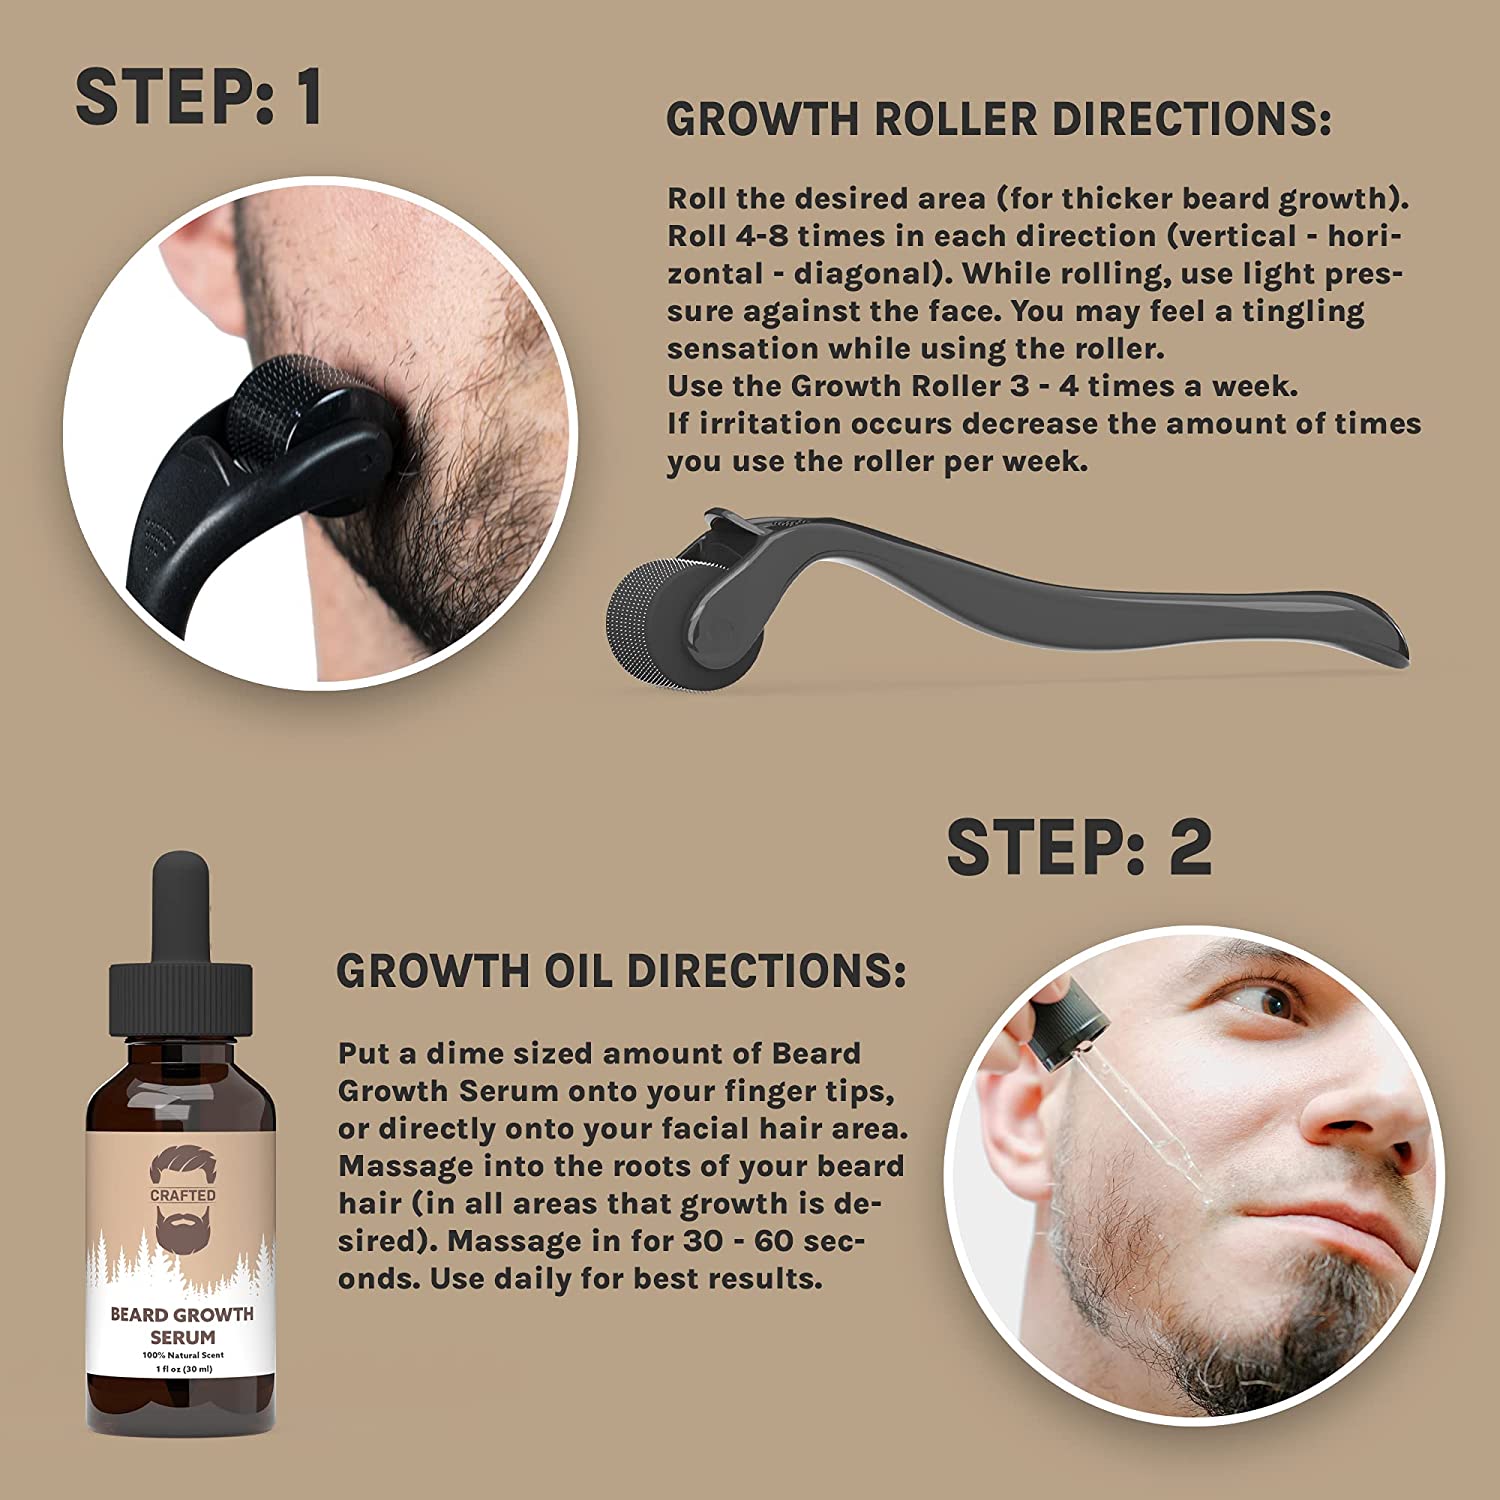 Derma Roller for Beard Growth + Beard Growth Serum - Stimulate Beard and Hair Growth - Derma Roller for Men - Amazing Beard Growth Kit - image 5 of 6